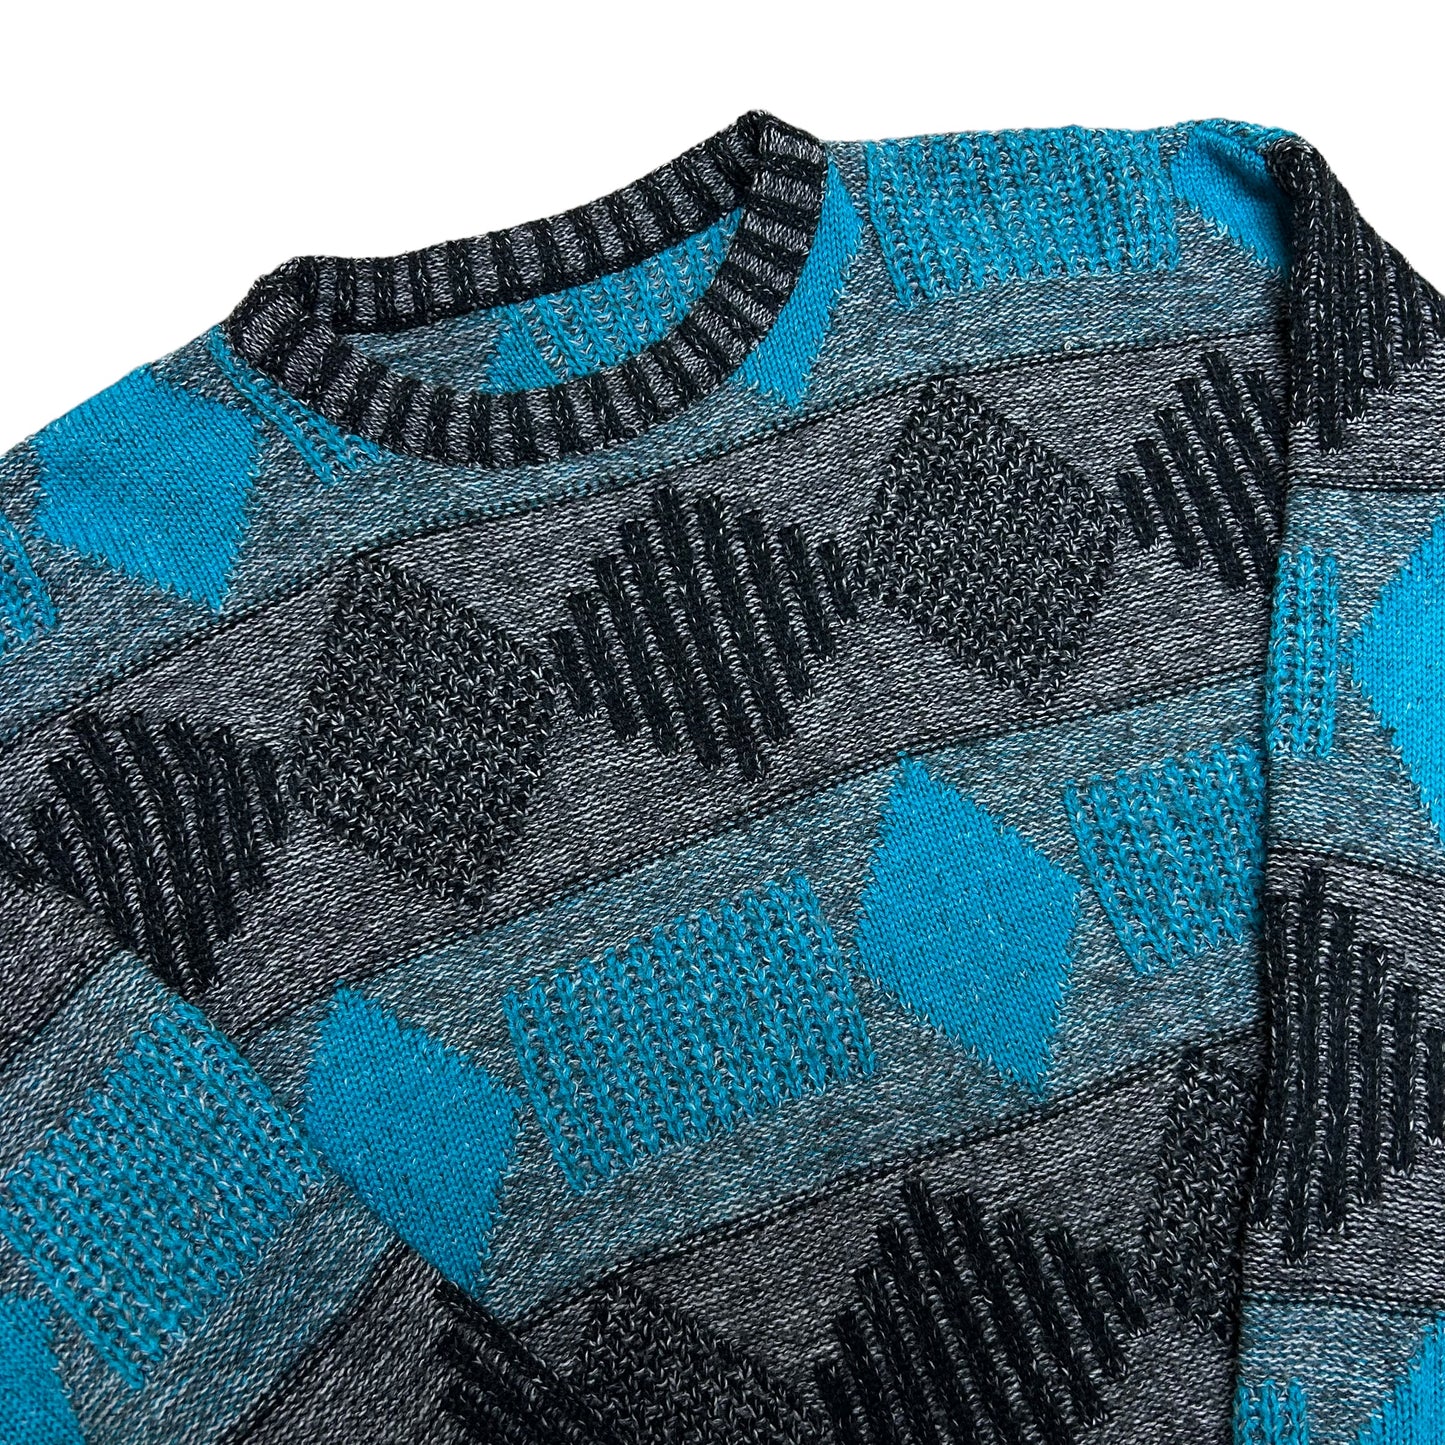 Vintage 1990s Grey/Black/Cyan Geometric Pattern Knit Sweater - Size  Large